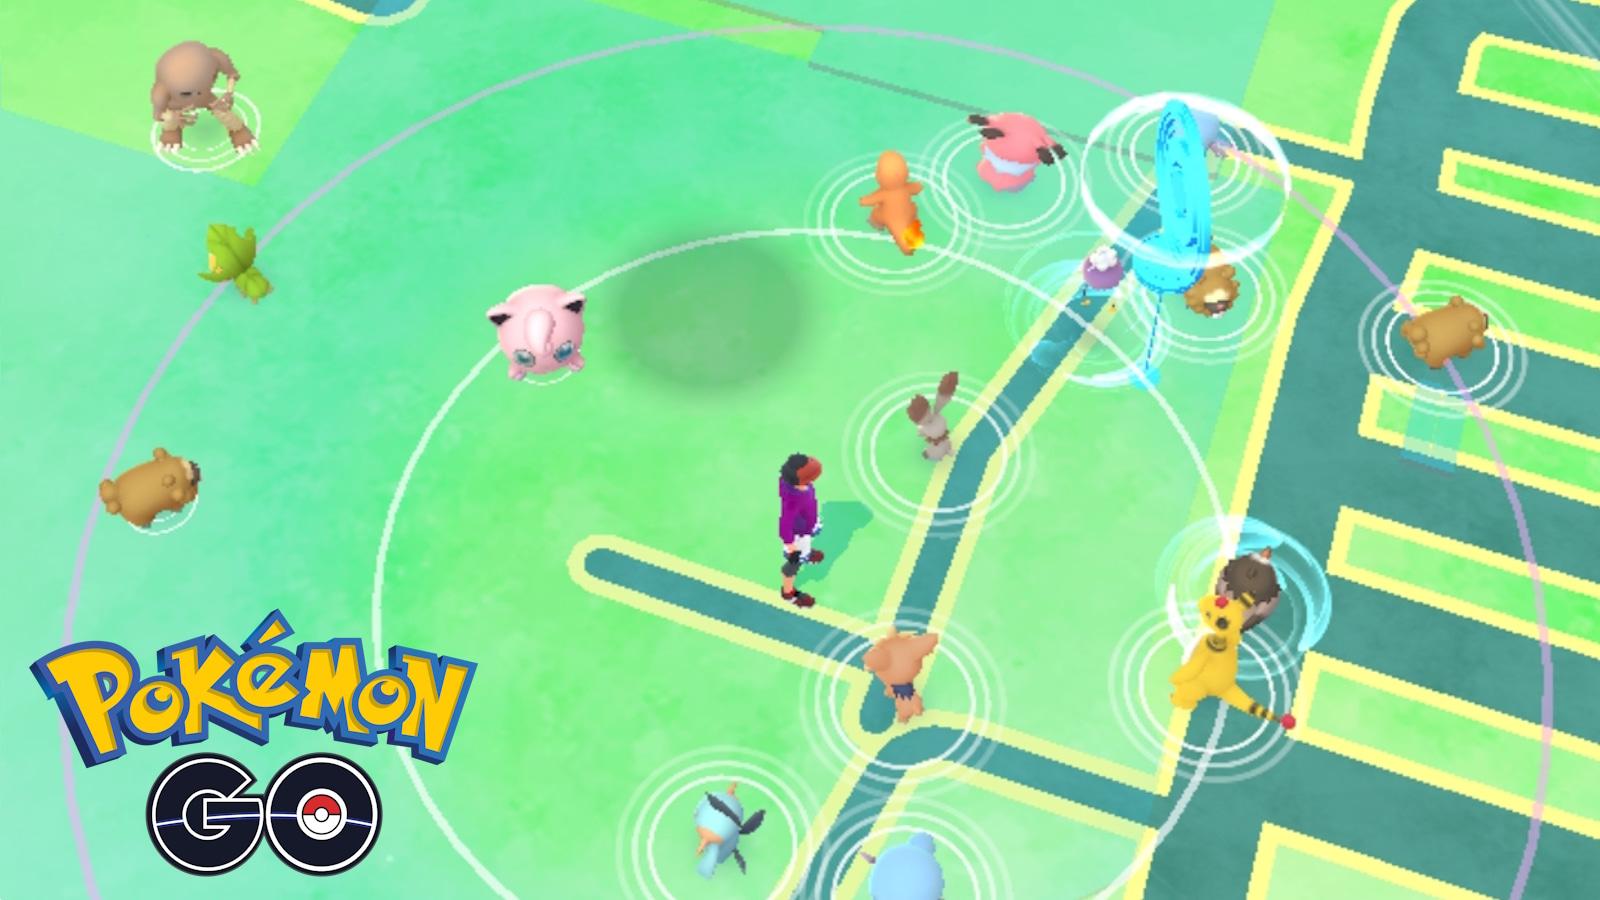 Pokemon Go update 0.275 makes major change for finding nearby Pokemon